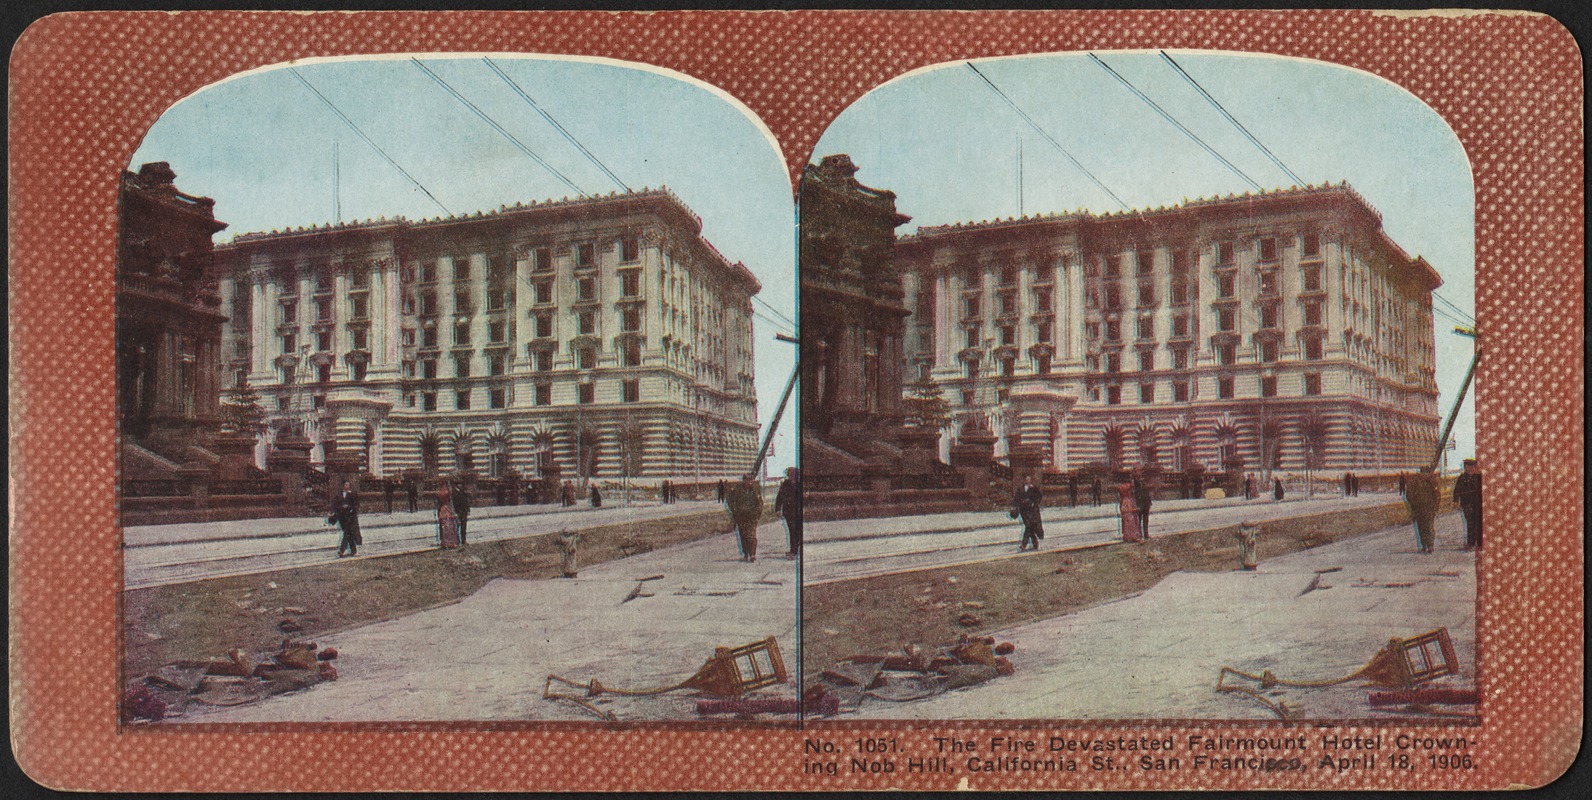 The fire devastated Fairmount Hotel crowning Nob Hill, California St., San Francisco, April 18, 1906